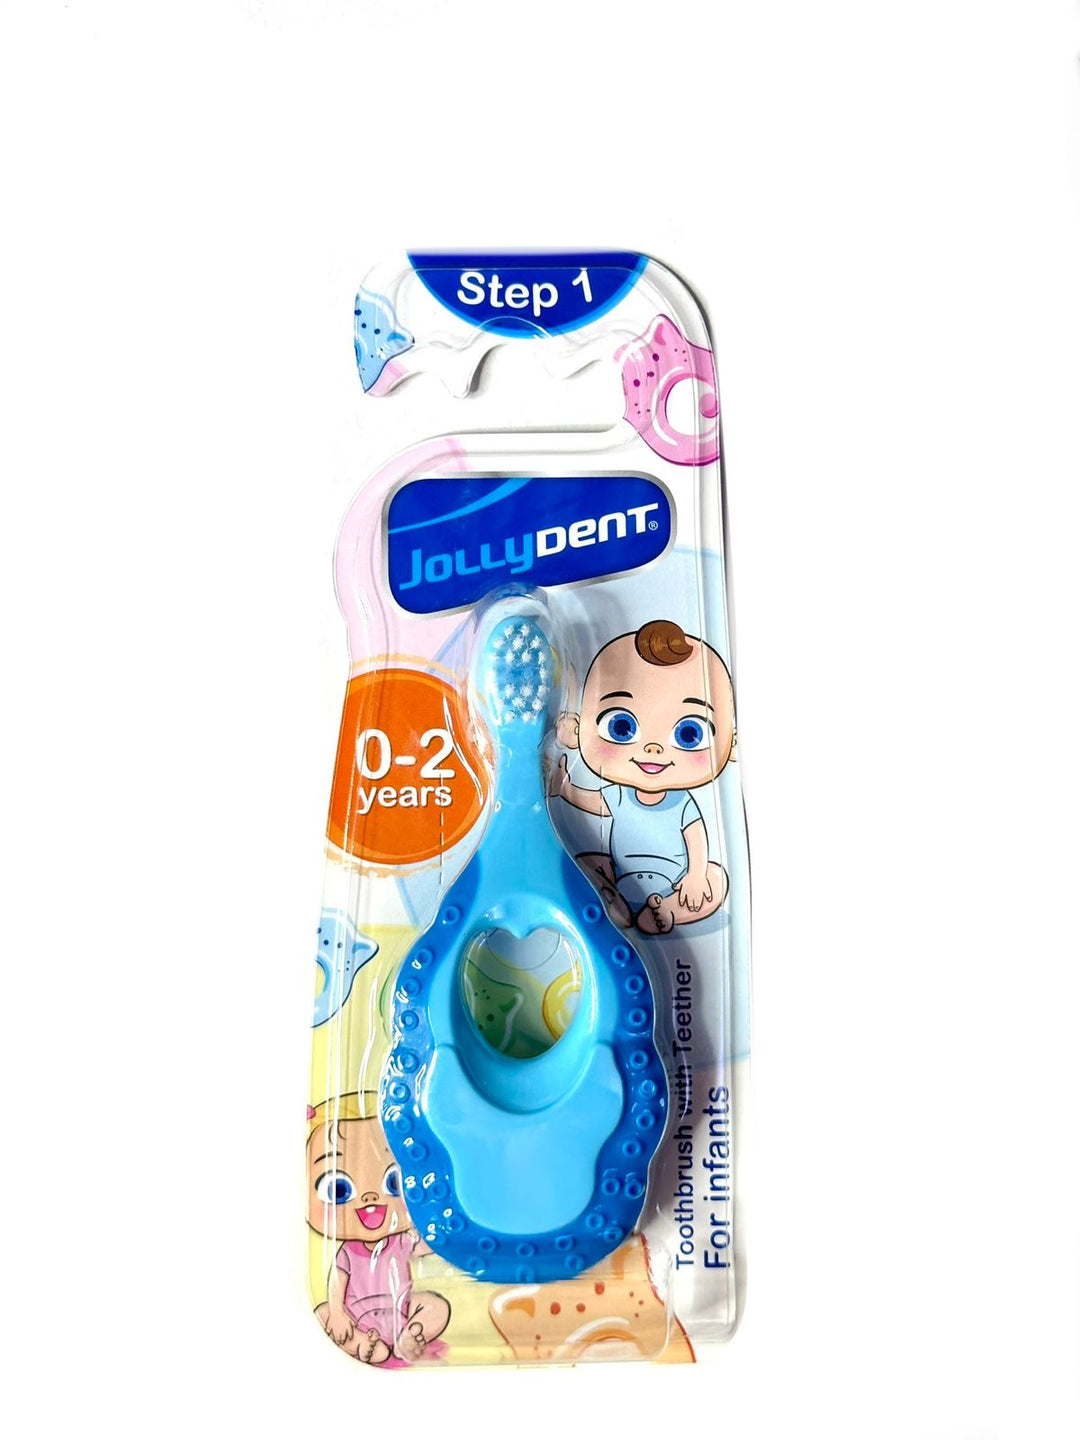 Jolly Dent Children’s toothbrush 0 to 2 years - Step 1 | جولي دينت فرشاة أسنان الأطفال من 0 إلى 2 سنة - الخطوة 1